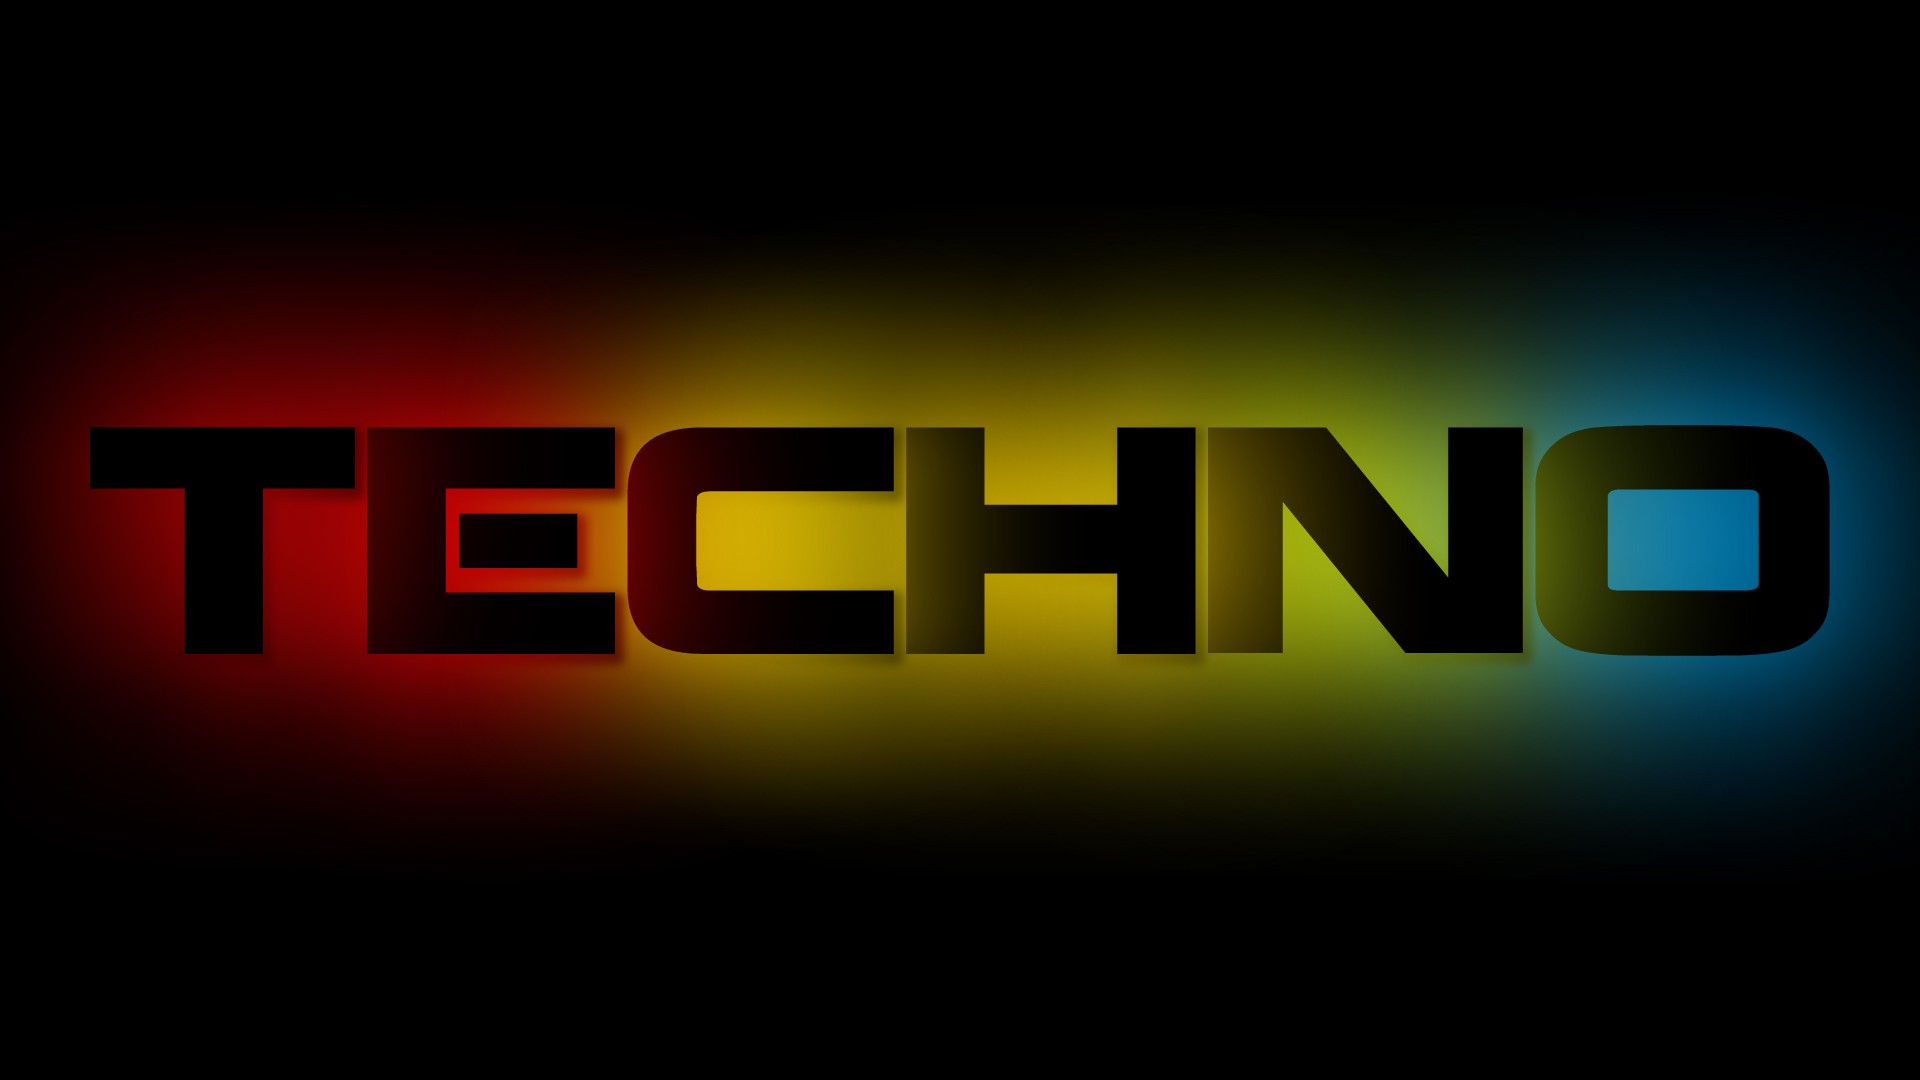 Techno Backgrounds, Compatible - PC, Mobile, Gadgets| 1920x1080 px